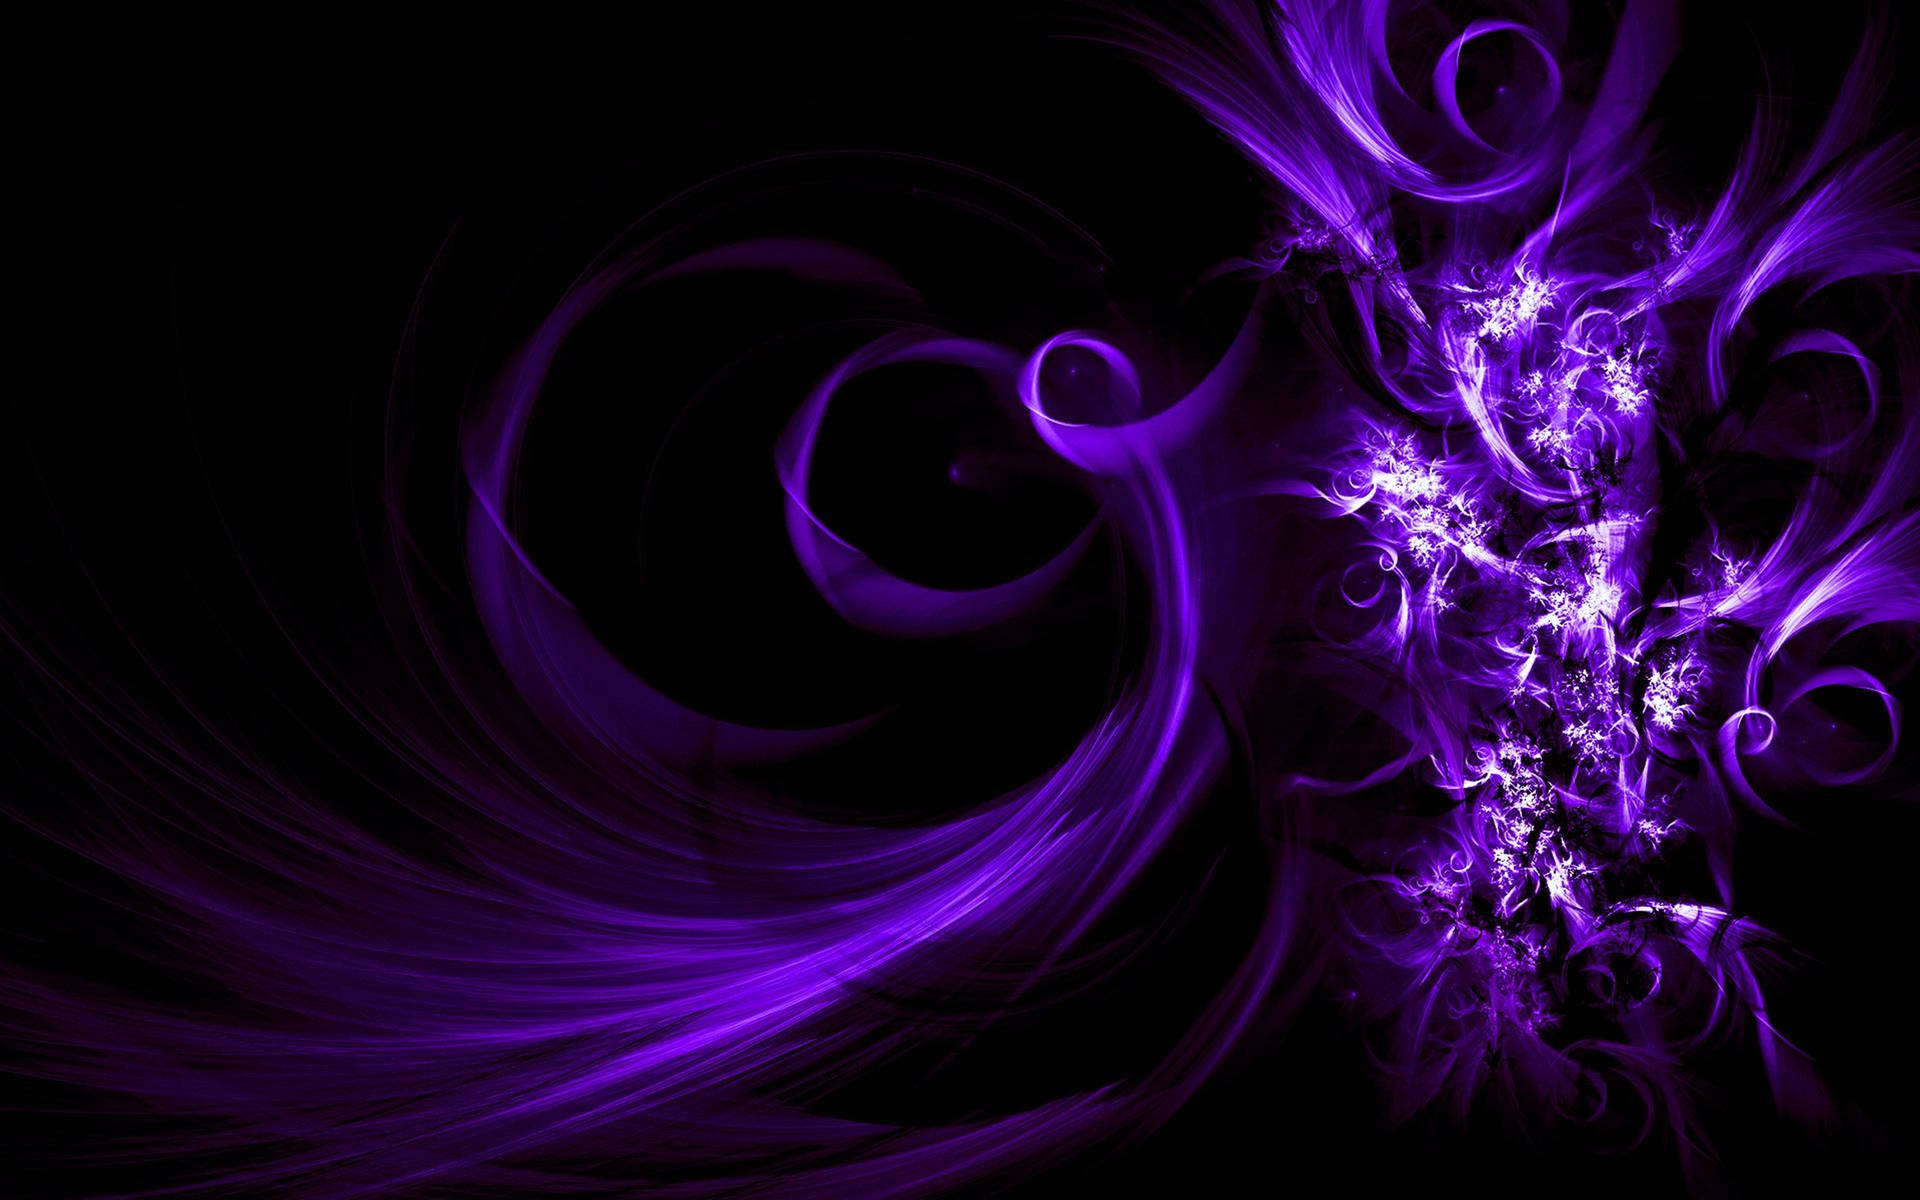 Brighten up your desktop with this gorgeous neon purple 4K wallpaper. Wallpaper